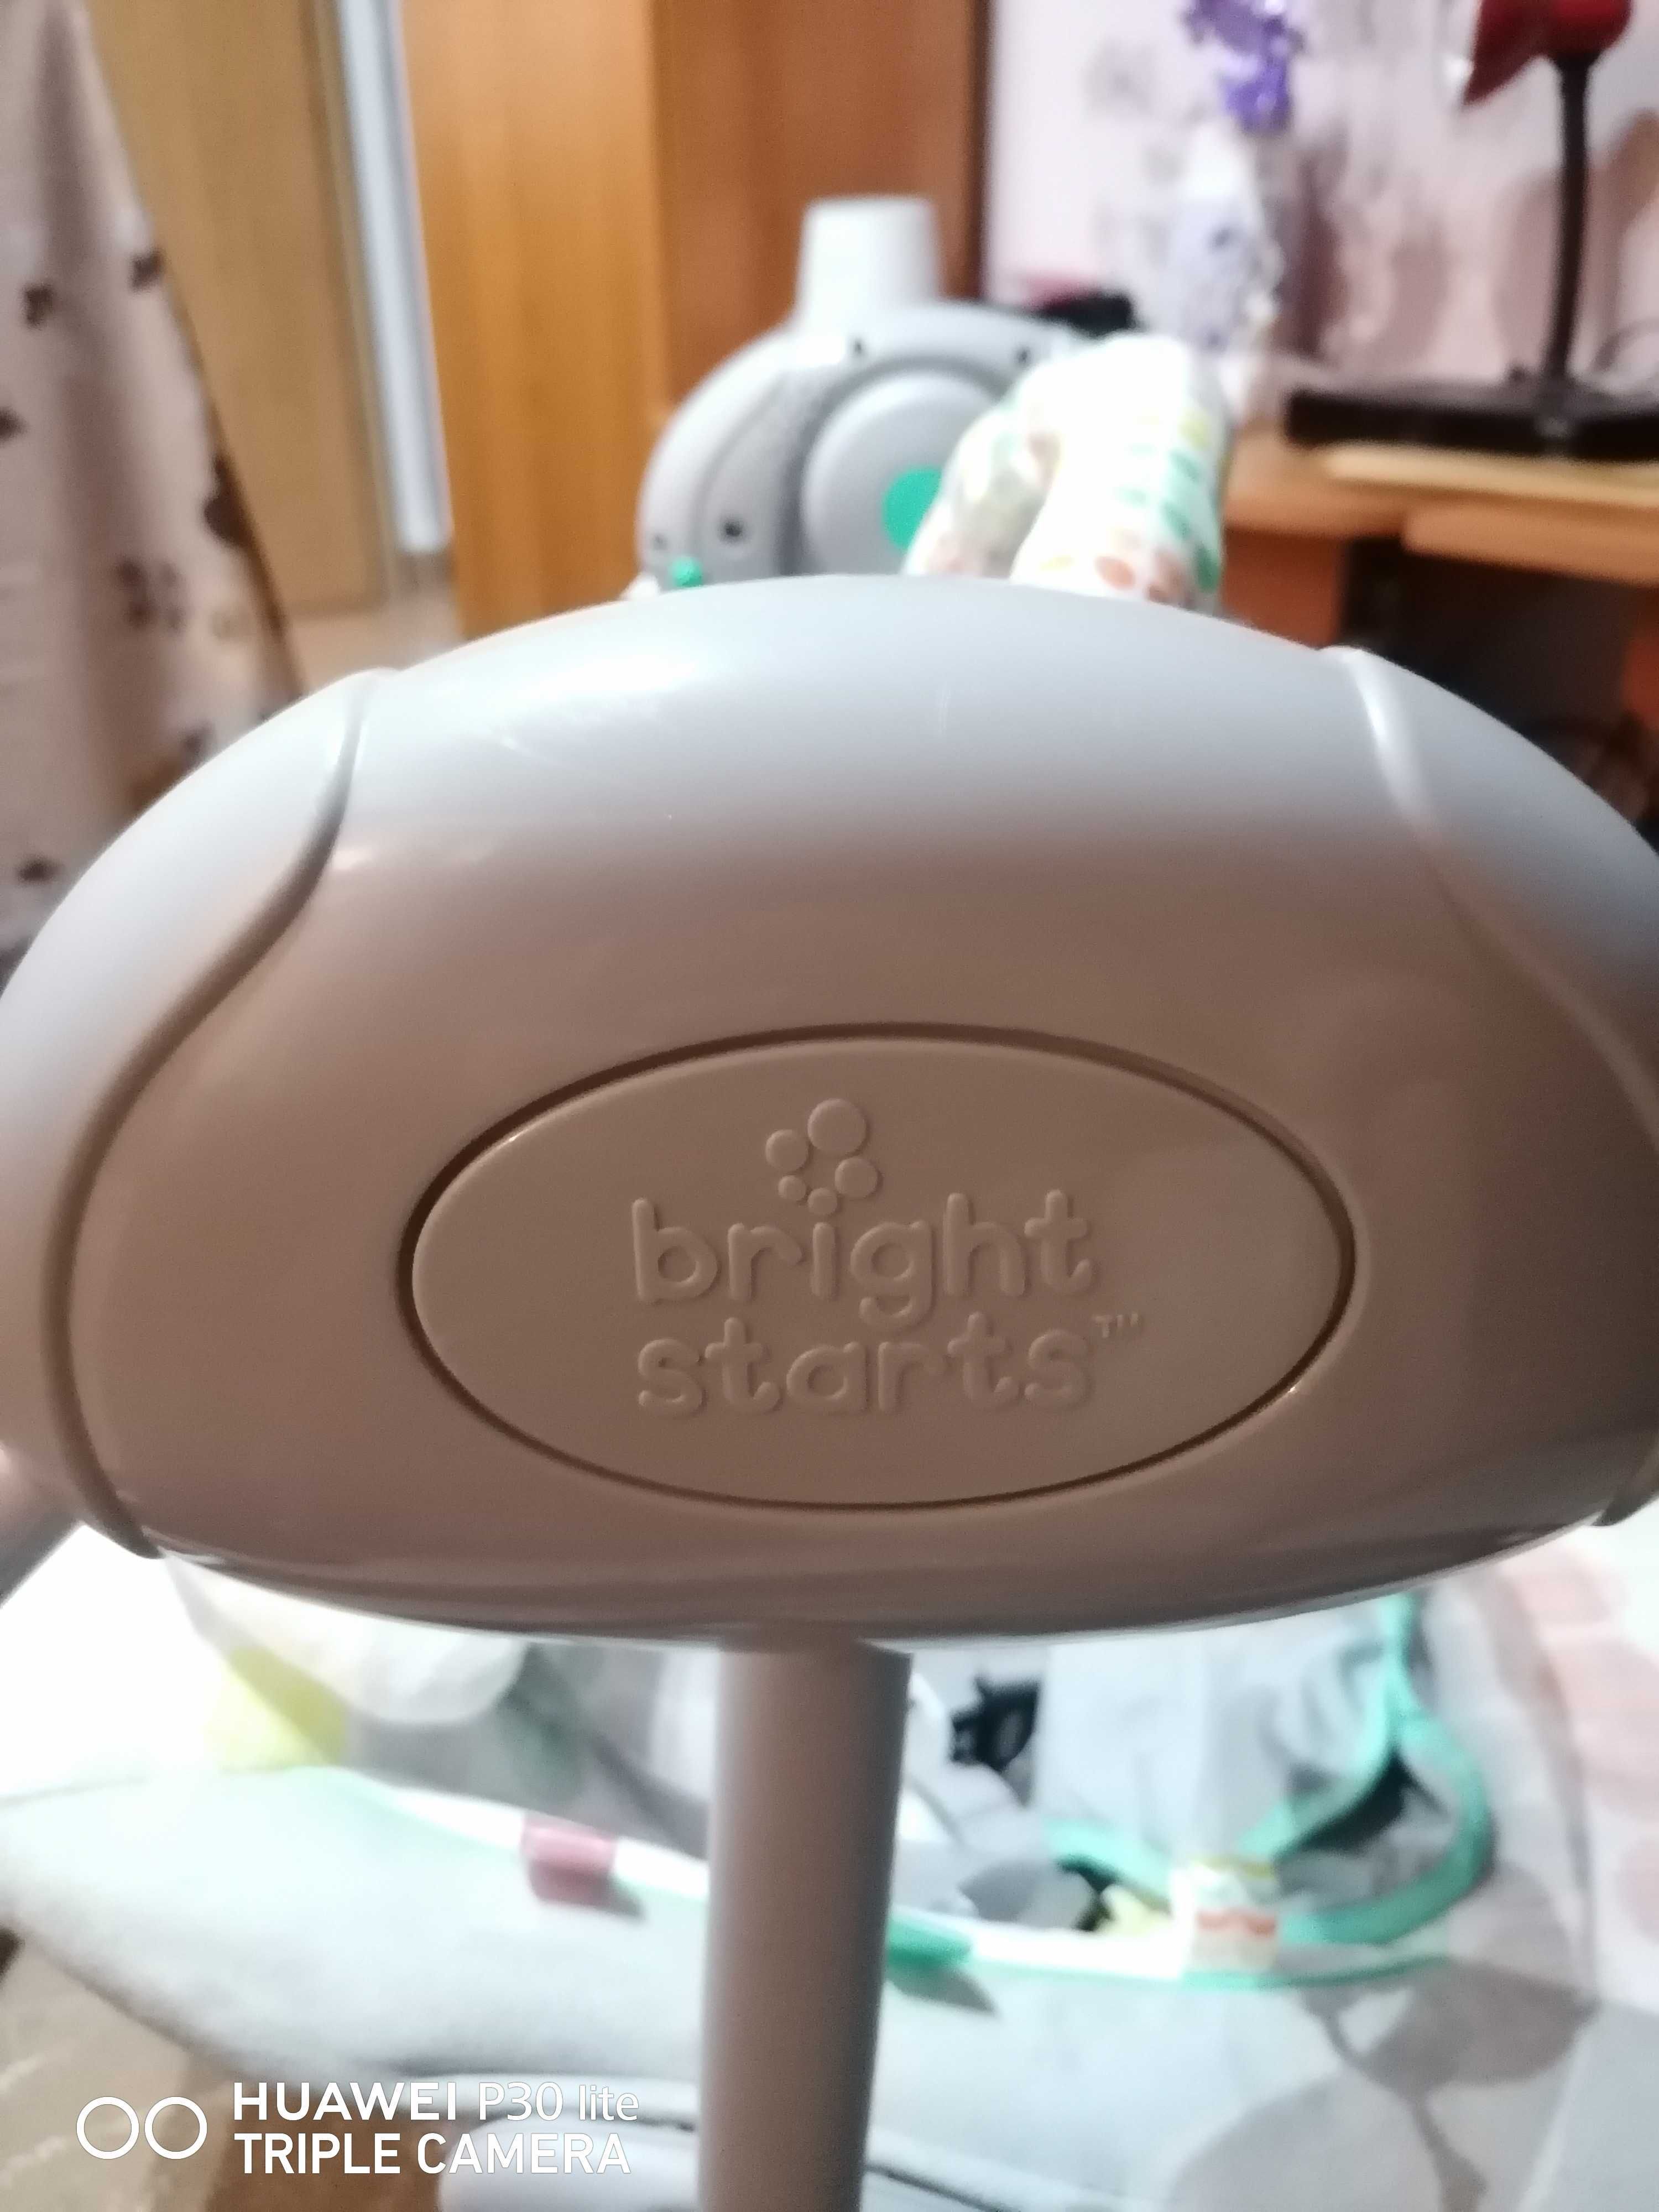 Balansoar elecric portabil bebeluși - Bright Starts